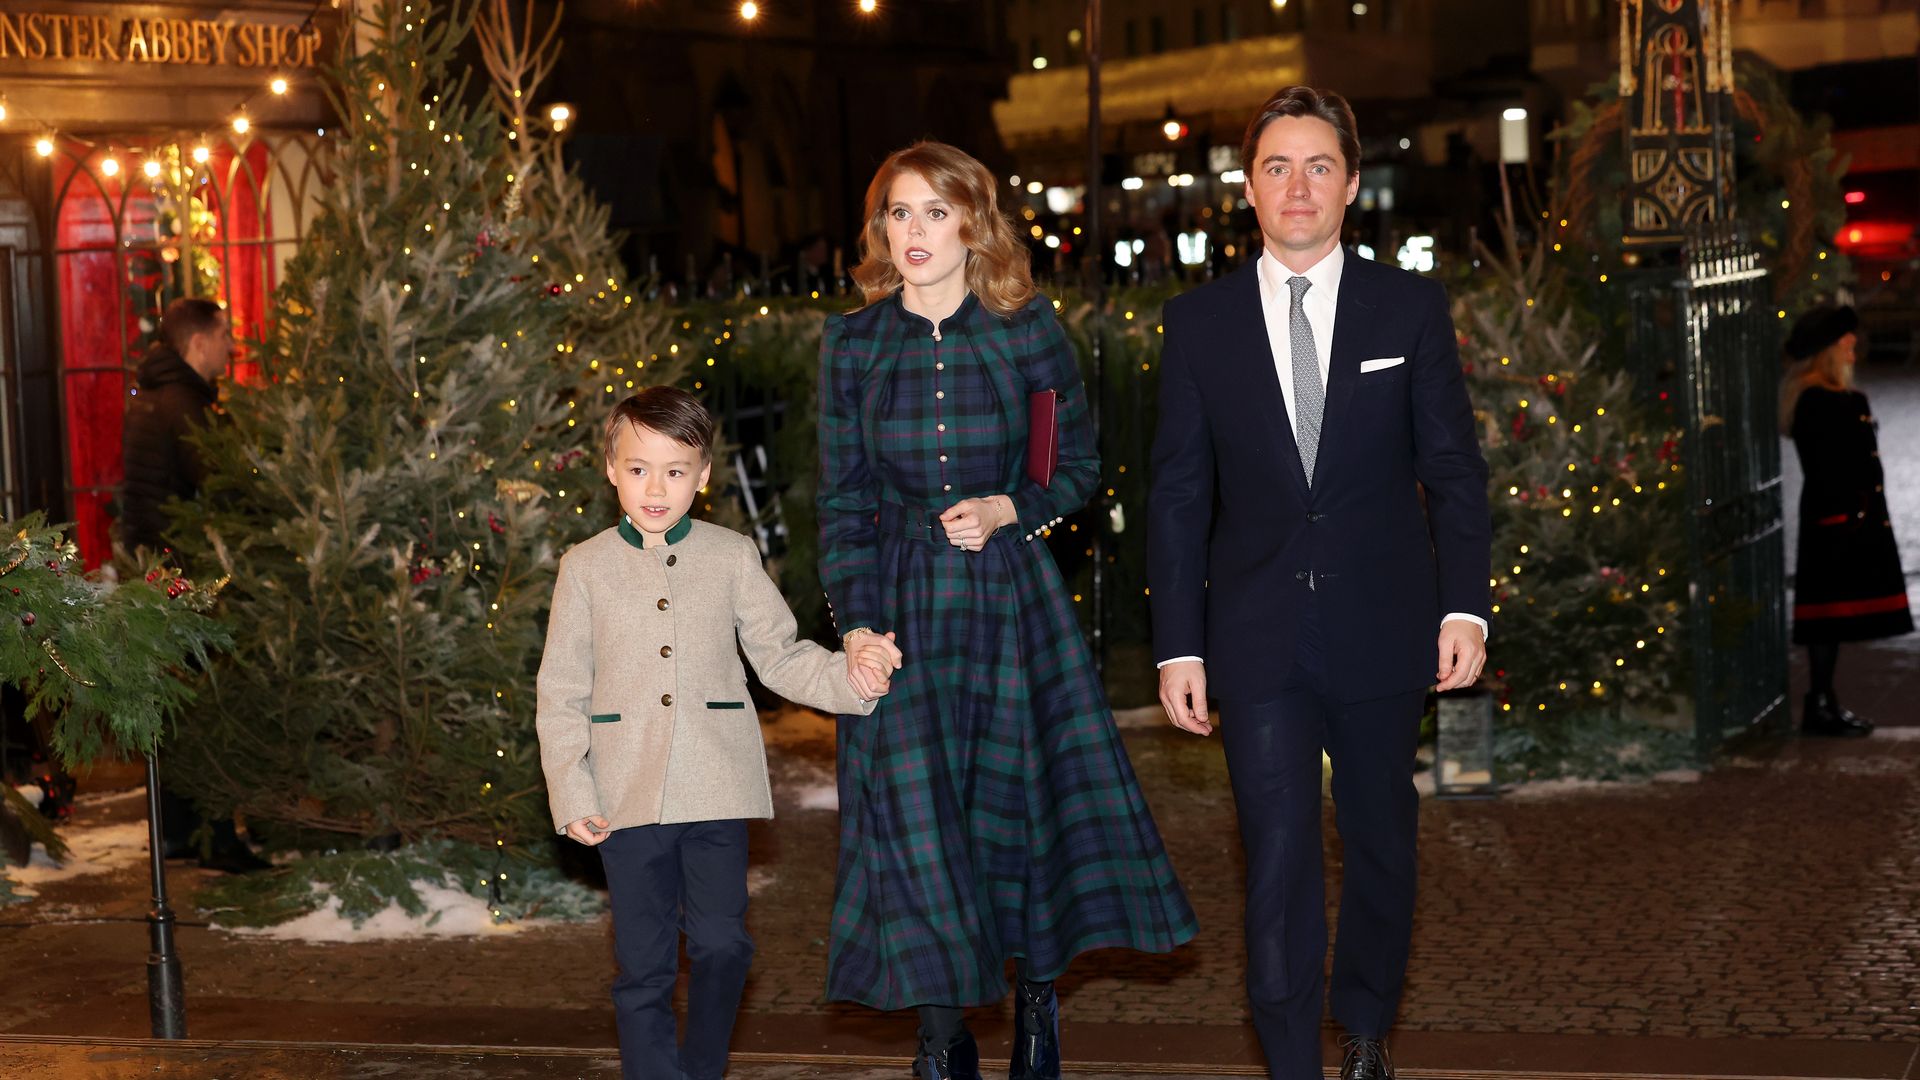 Princess Beatrice, Edoardo Mapelli Mozzi and Christopher Woolf attend Christmas concert